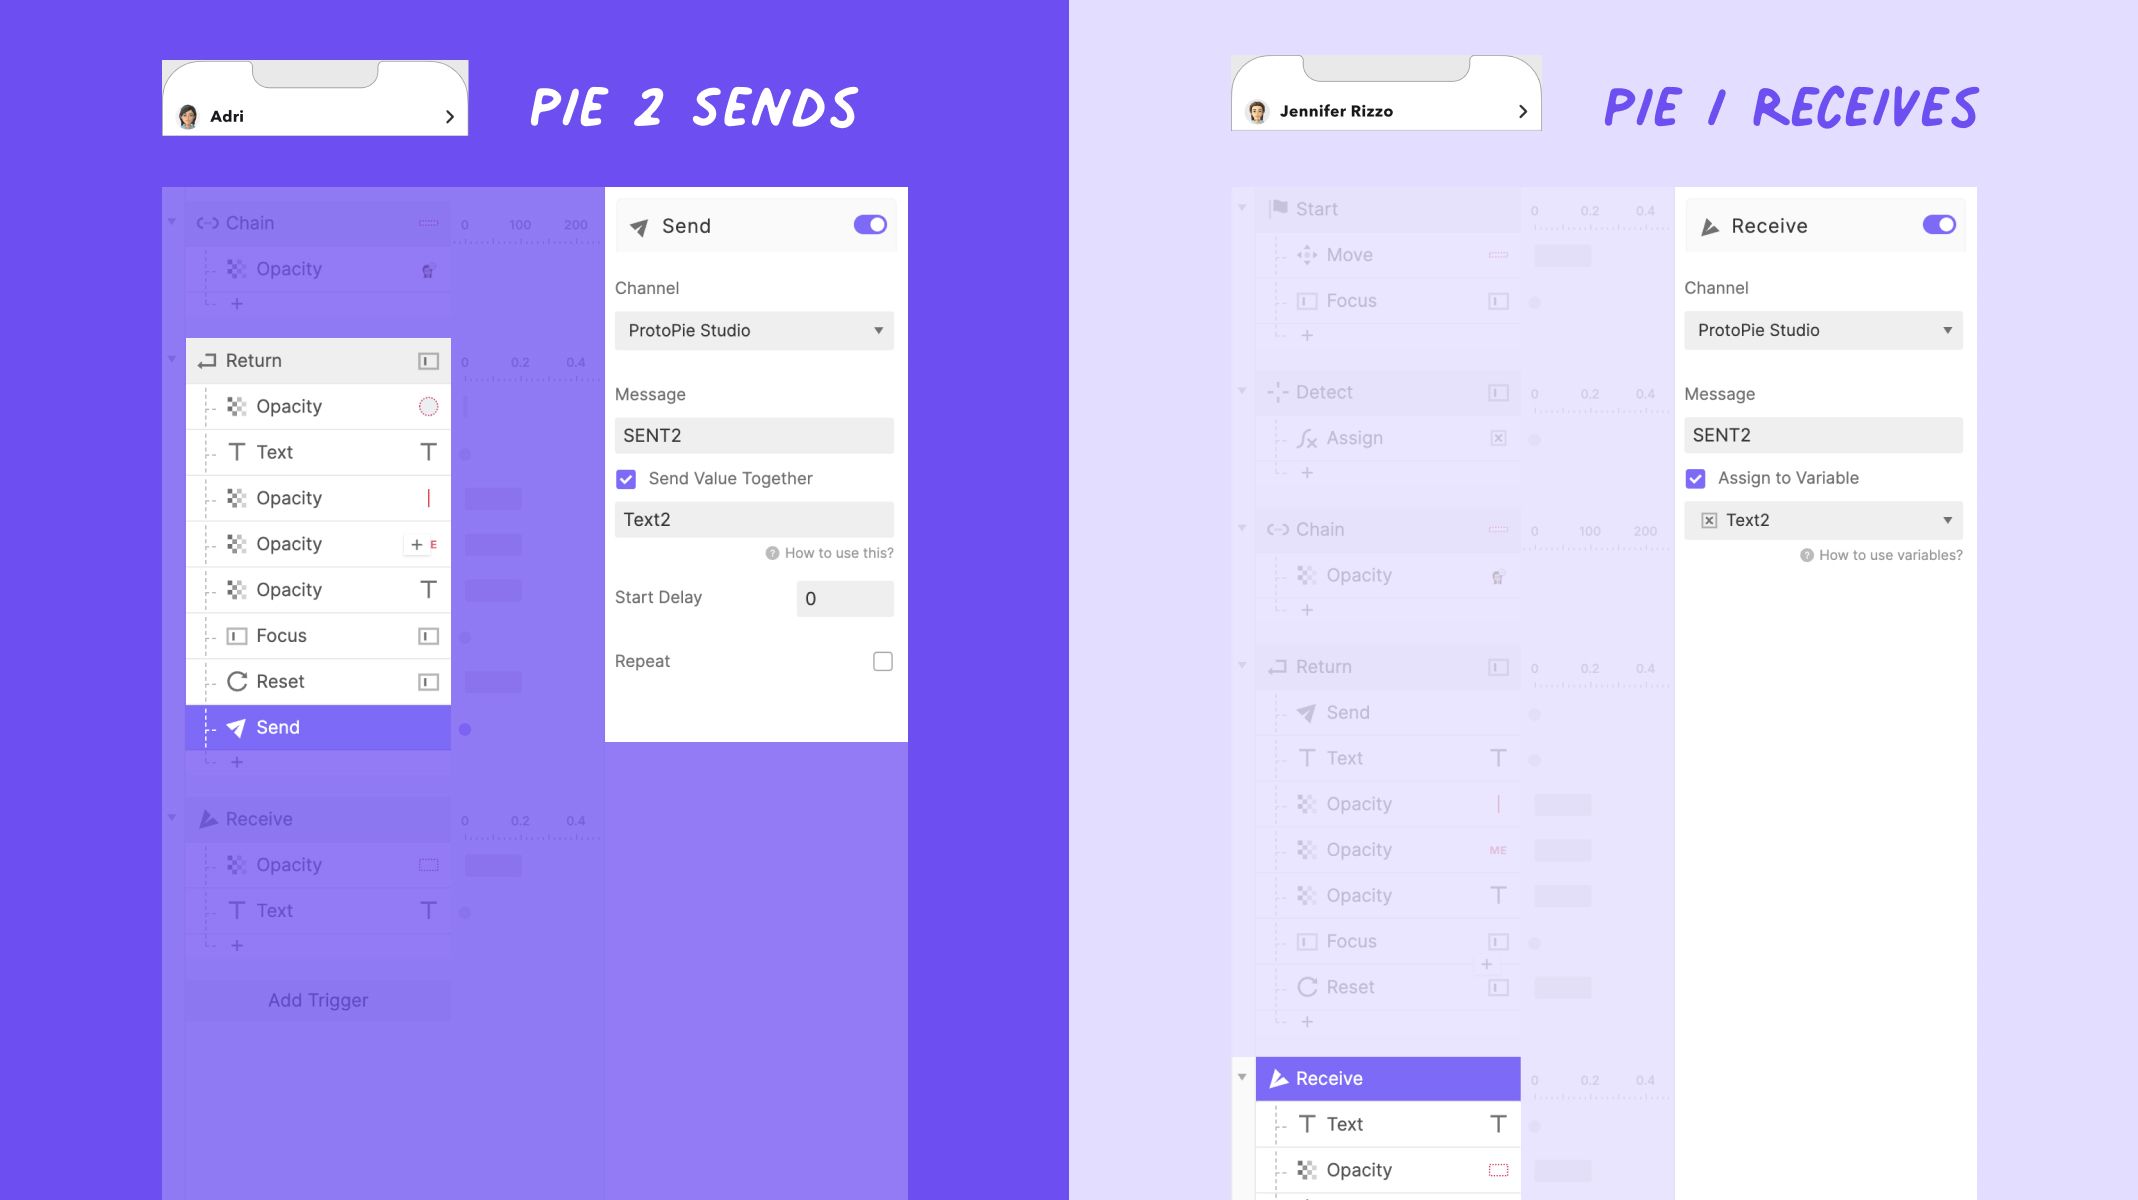 Pie 2 Sends, Pie 1 Receives - message “SENT 2”. 